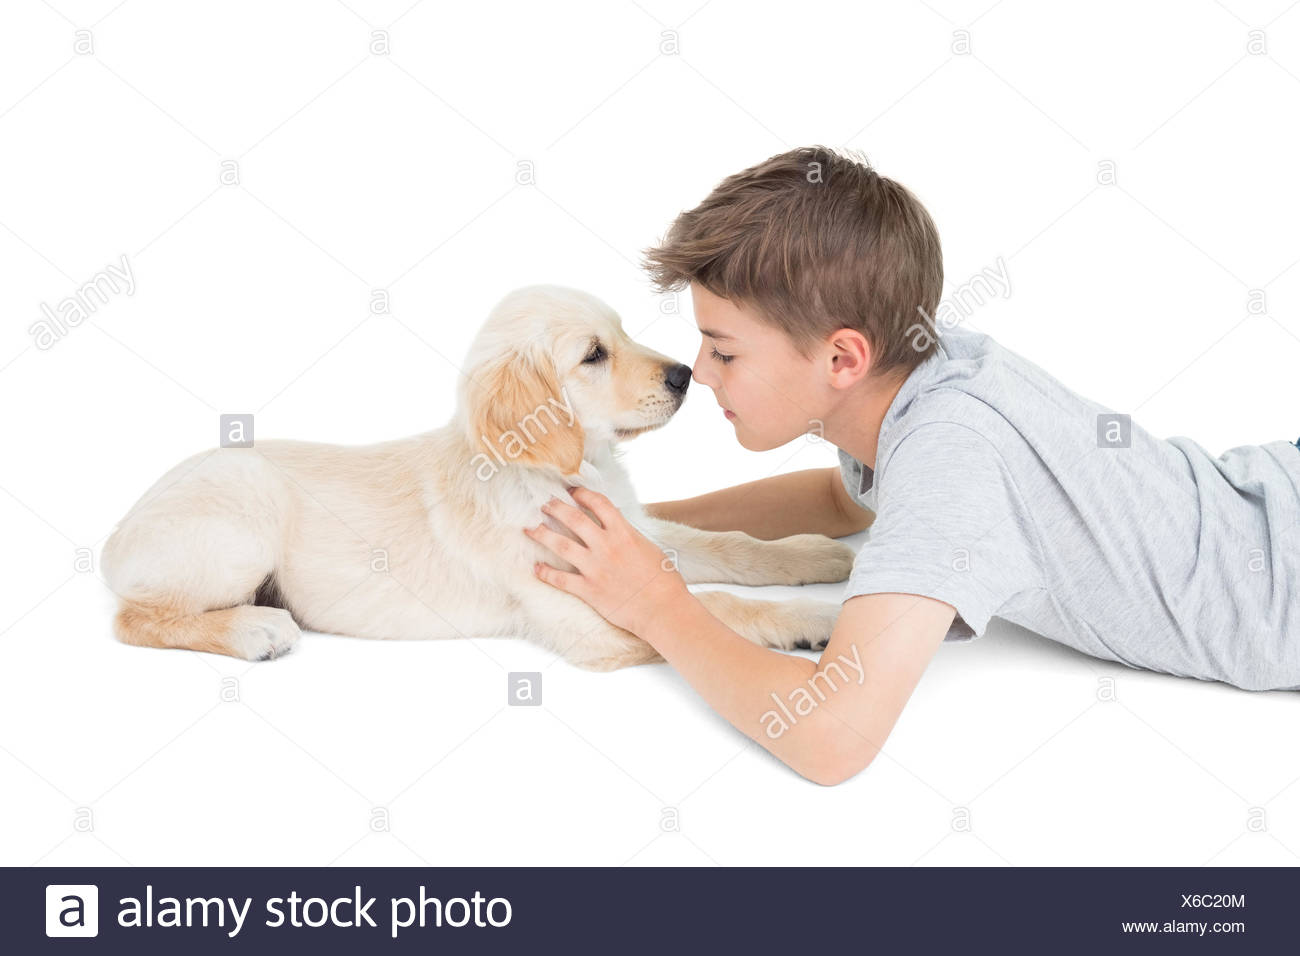 dog rubbing nose